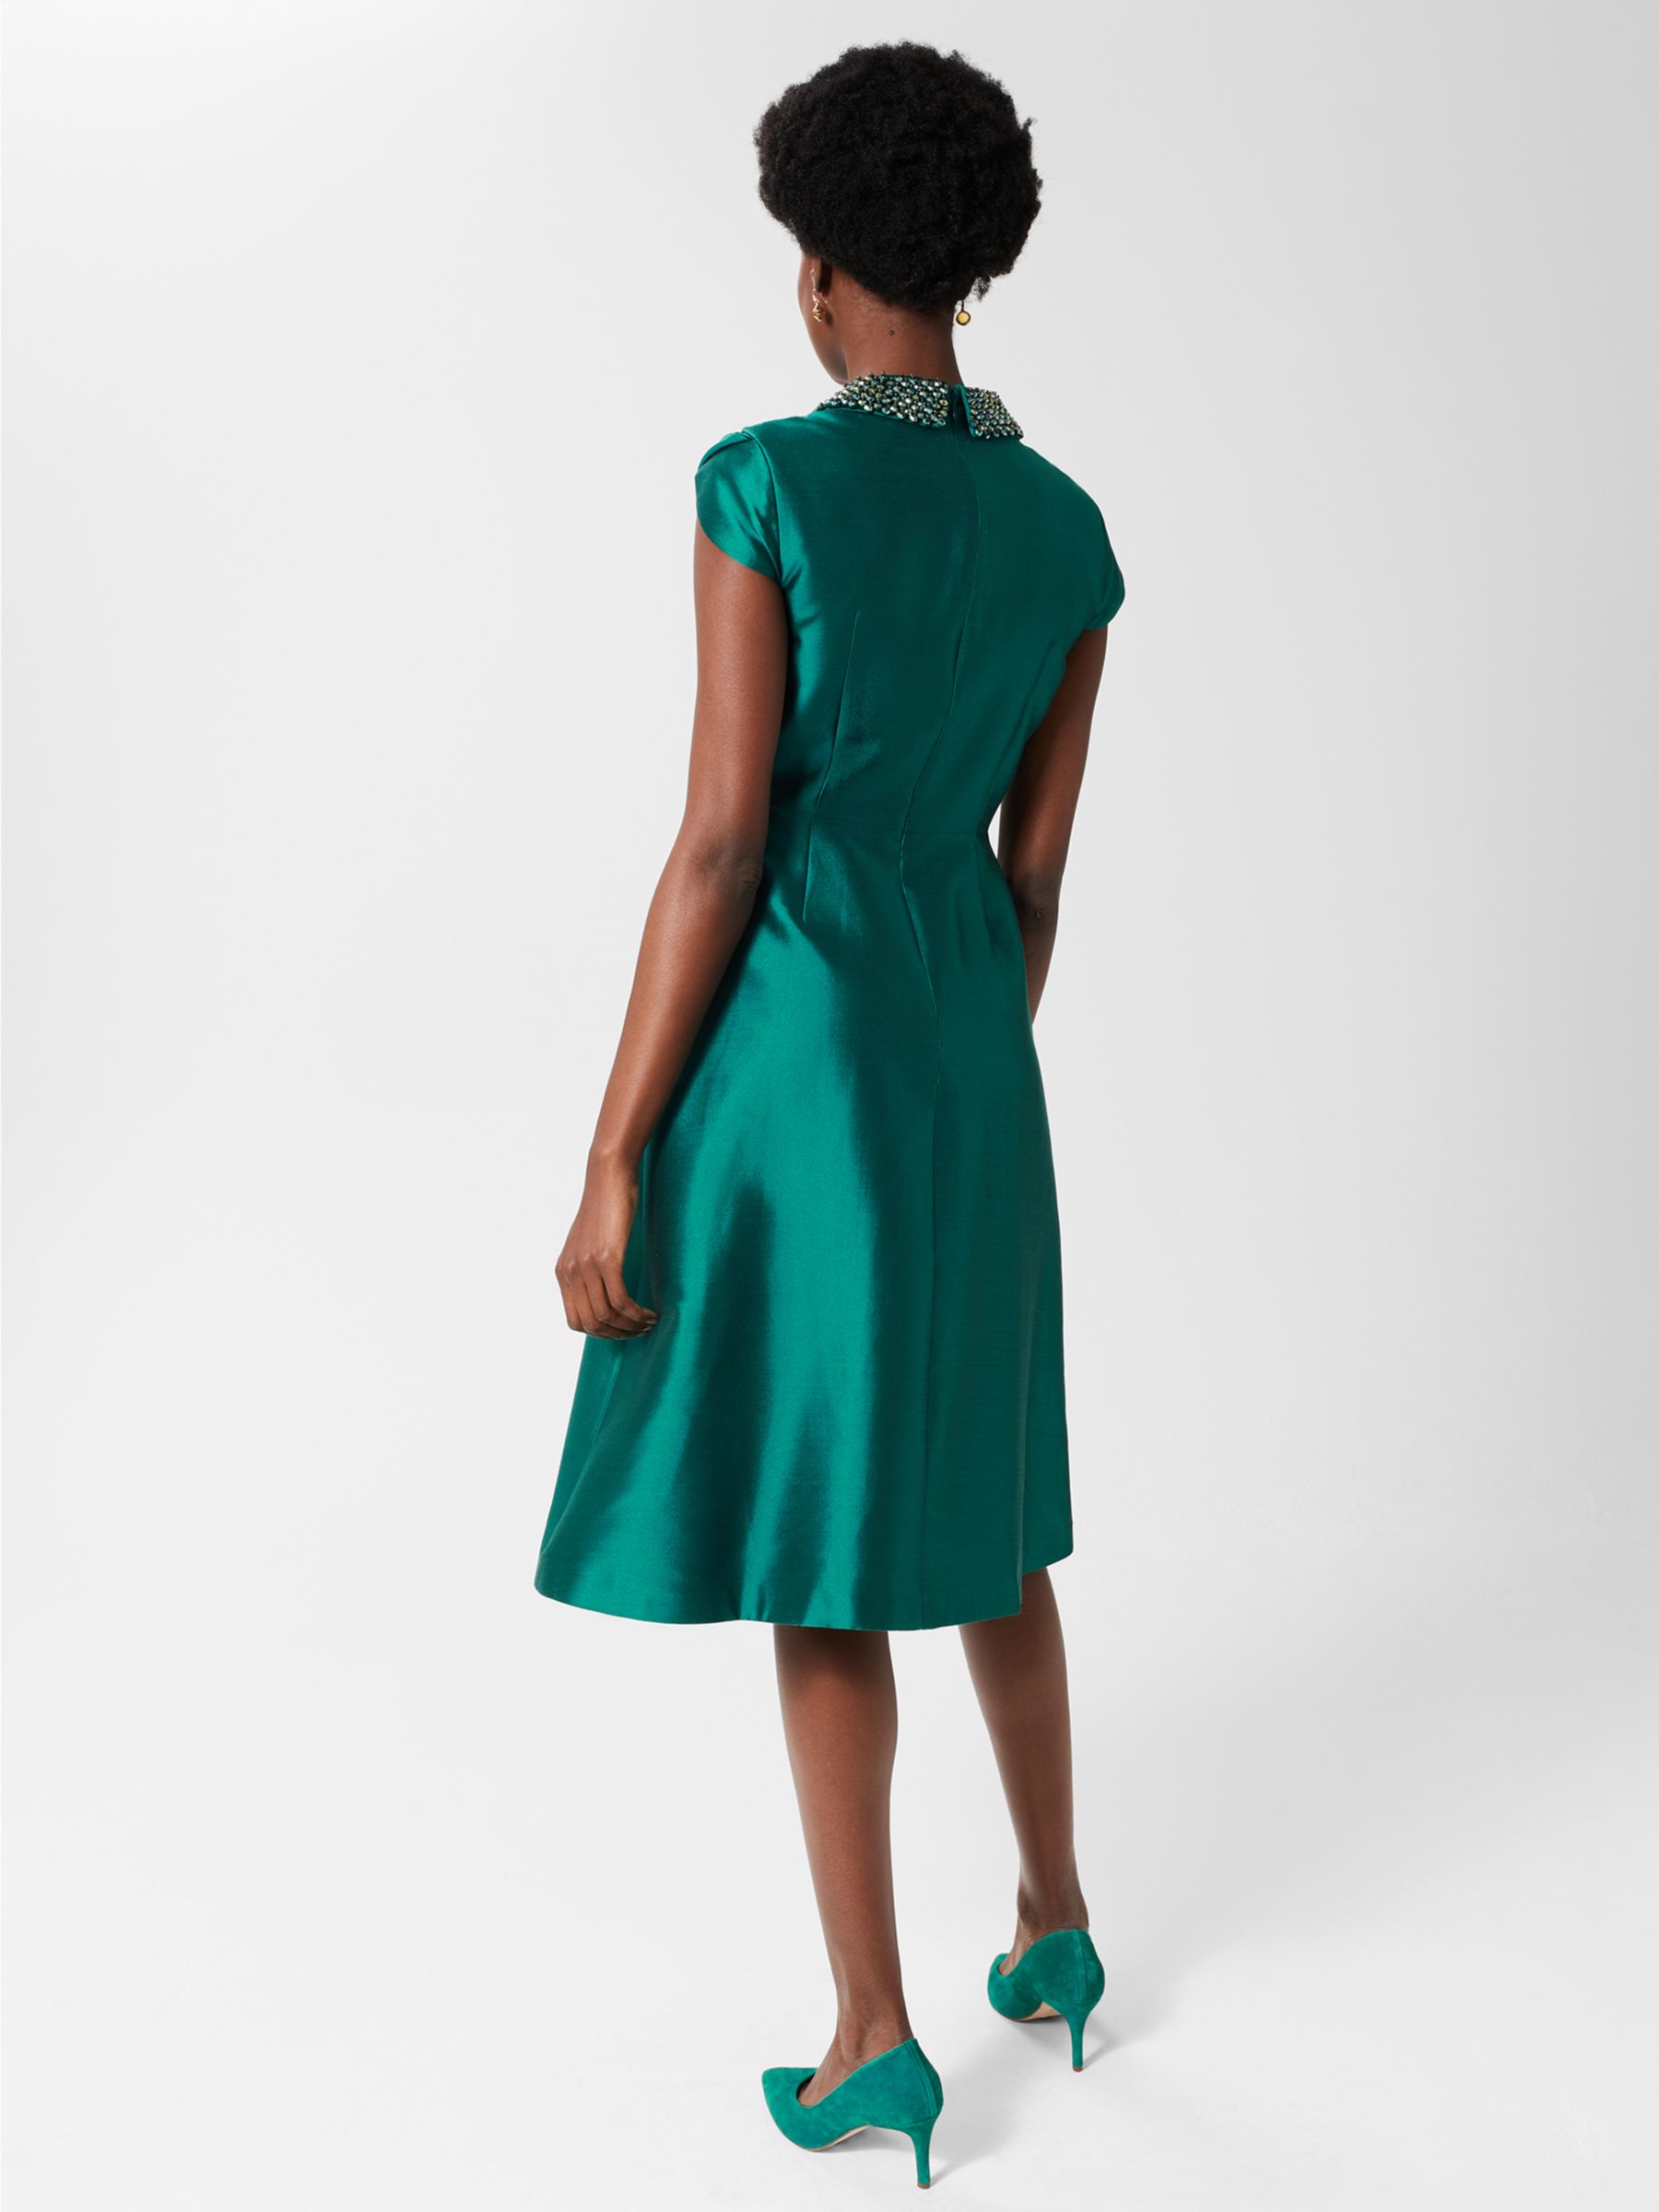 Hobbs Christie Embellished Neck Dress, Jewel Green at John Lewis & Partners